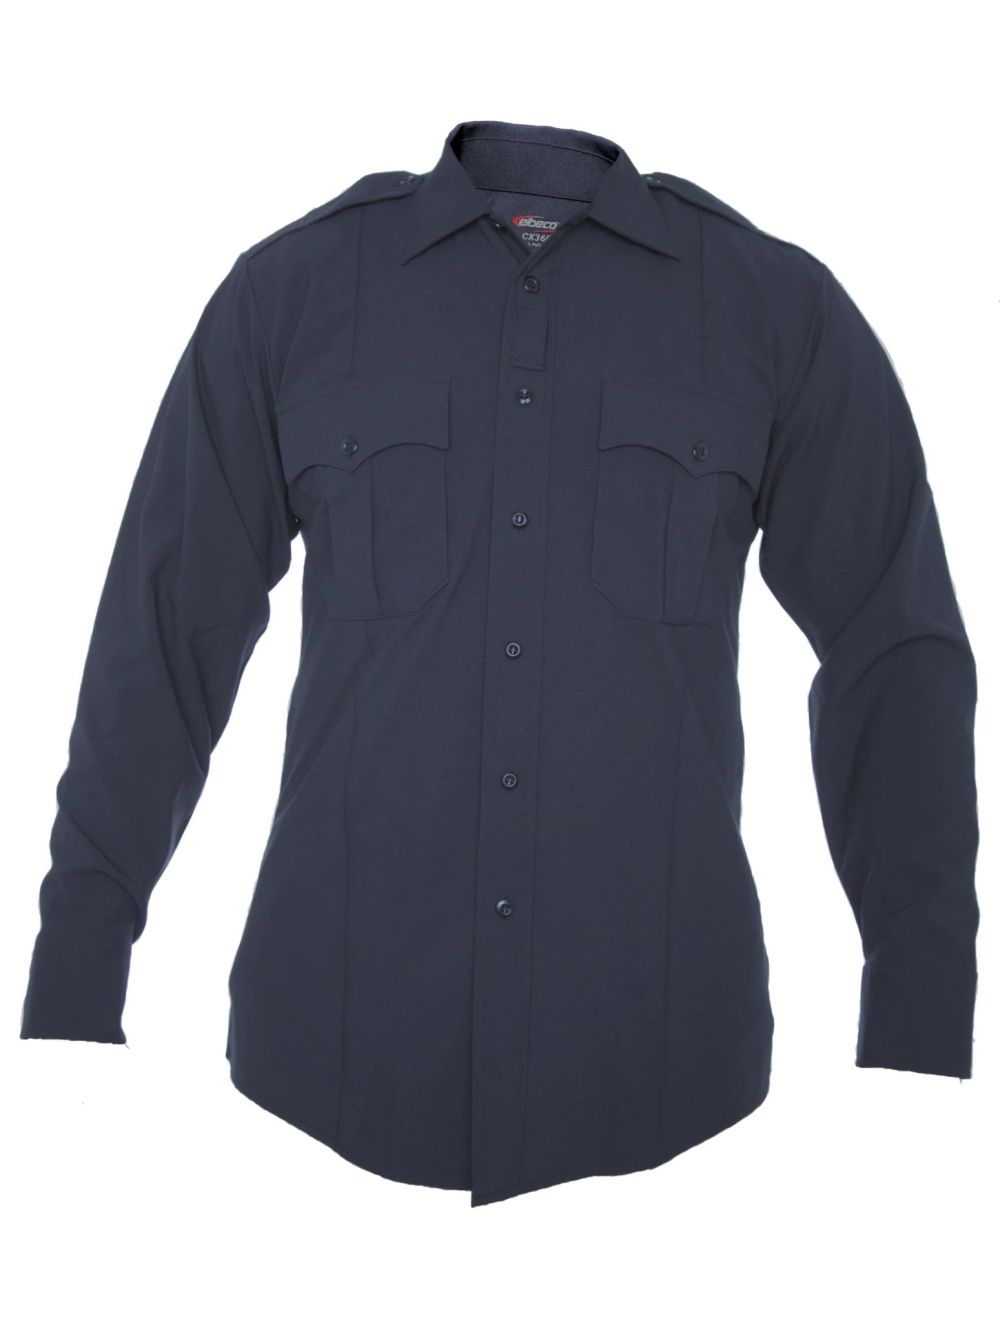 CX360 Long Sleeve Shirt-Mens-Midnight Navy